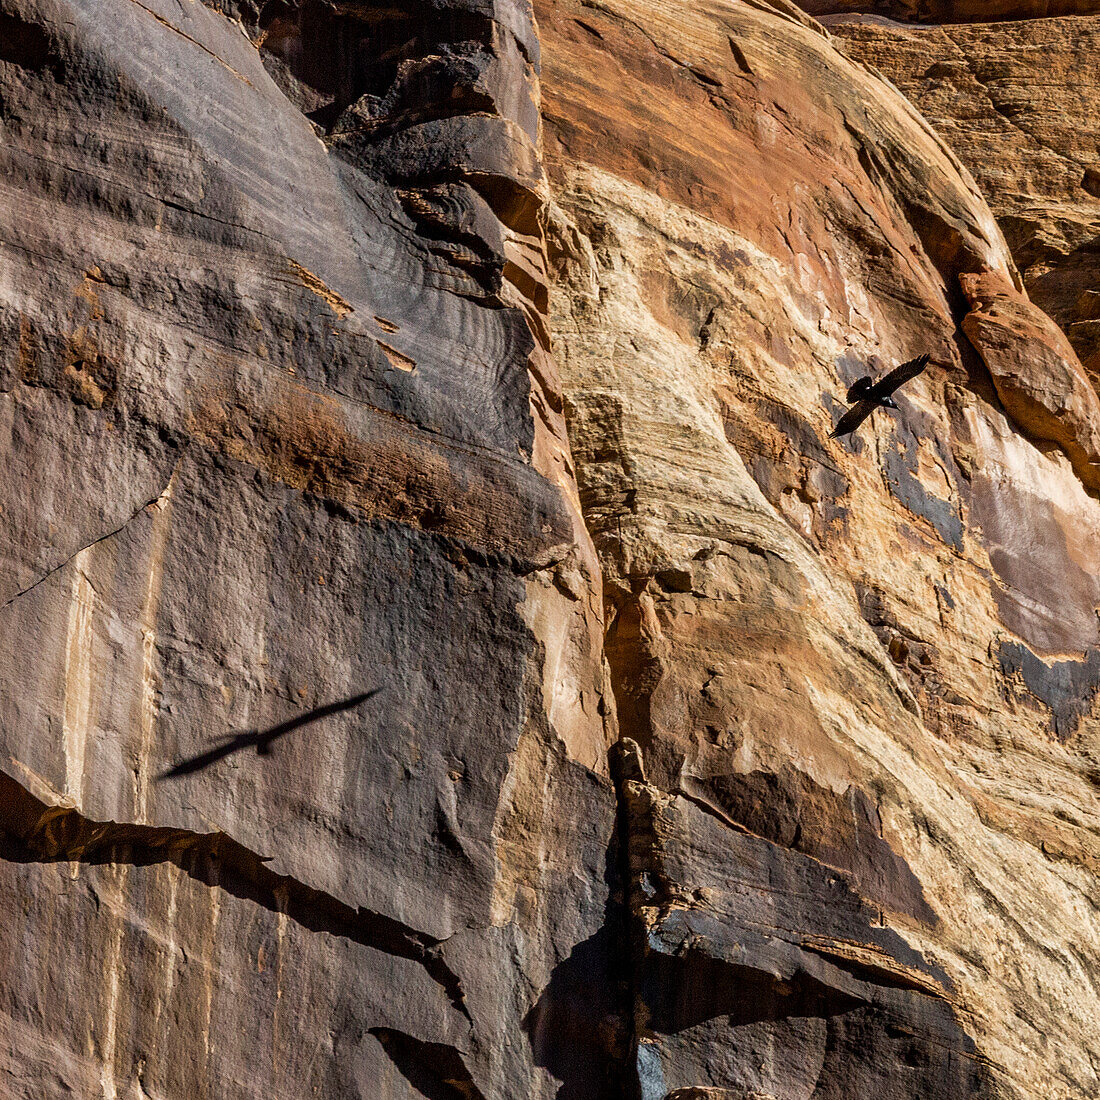 United States, Utah, Escalante, Raven flying along cliff